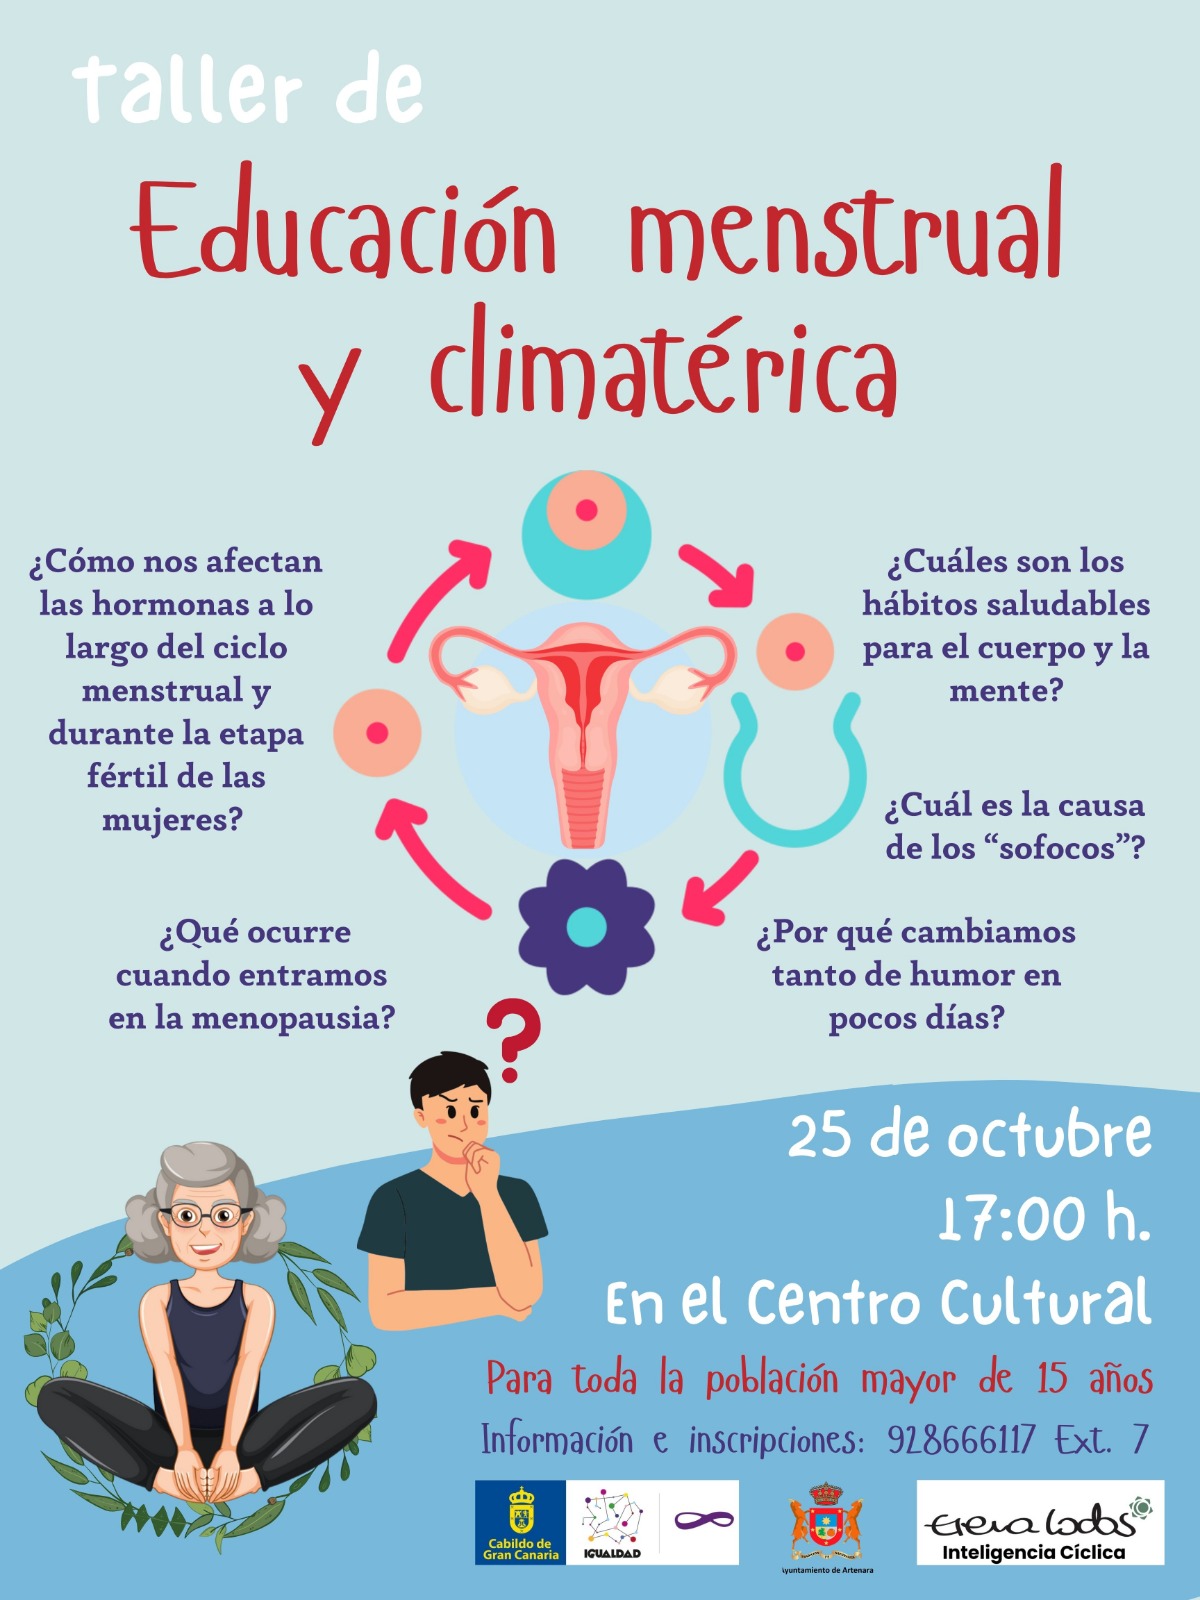 Taller de Educación Menstrual y Climatérica.